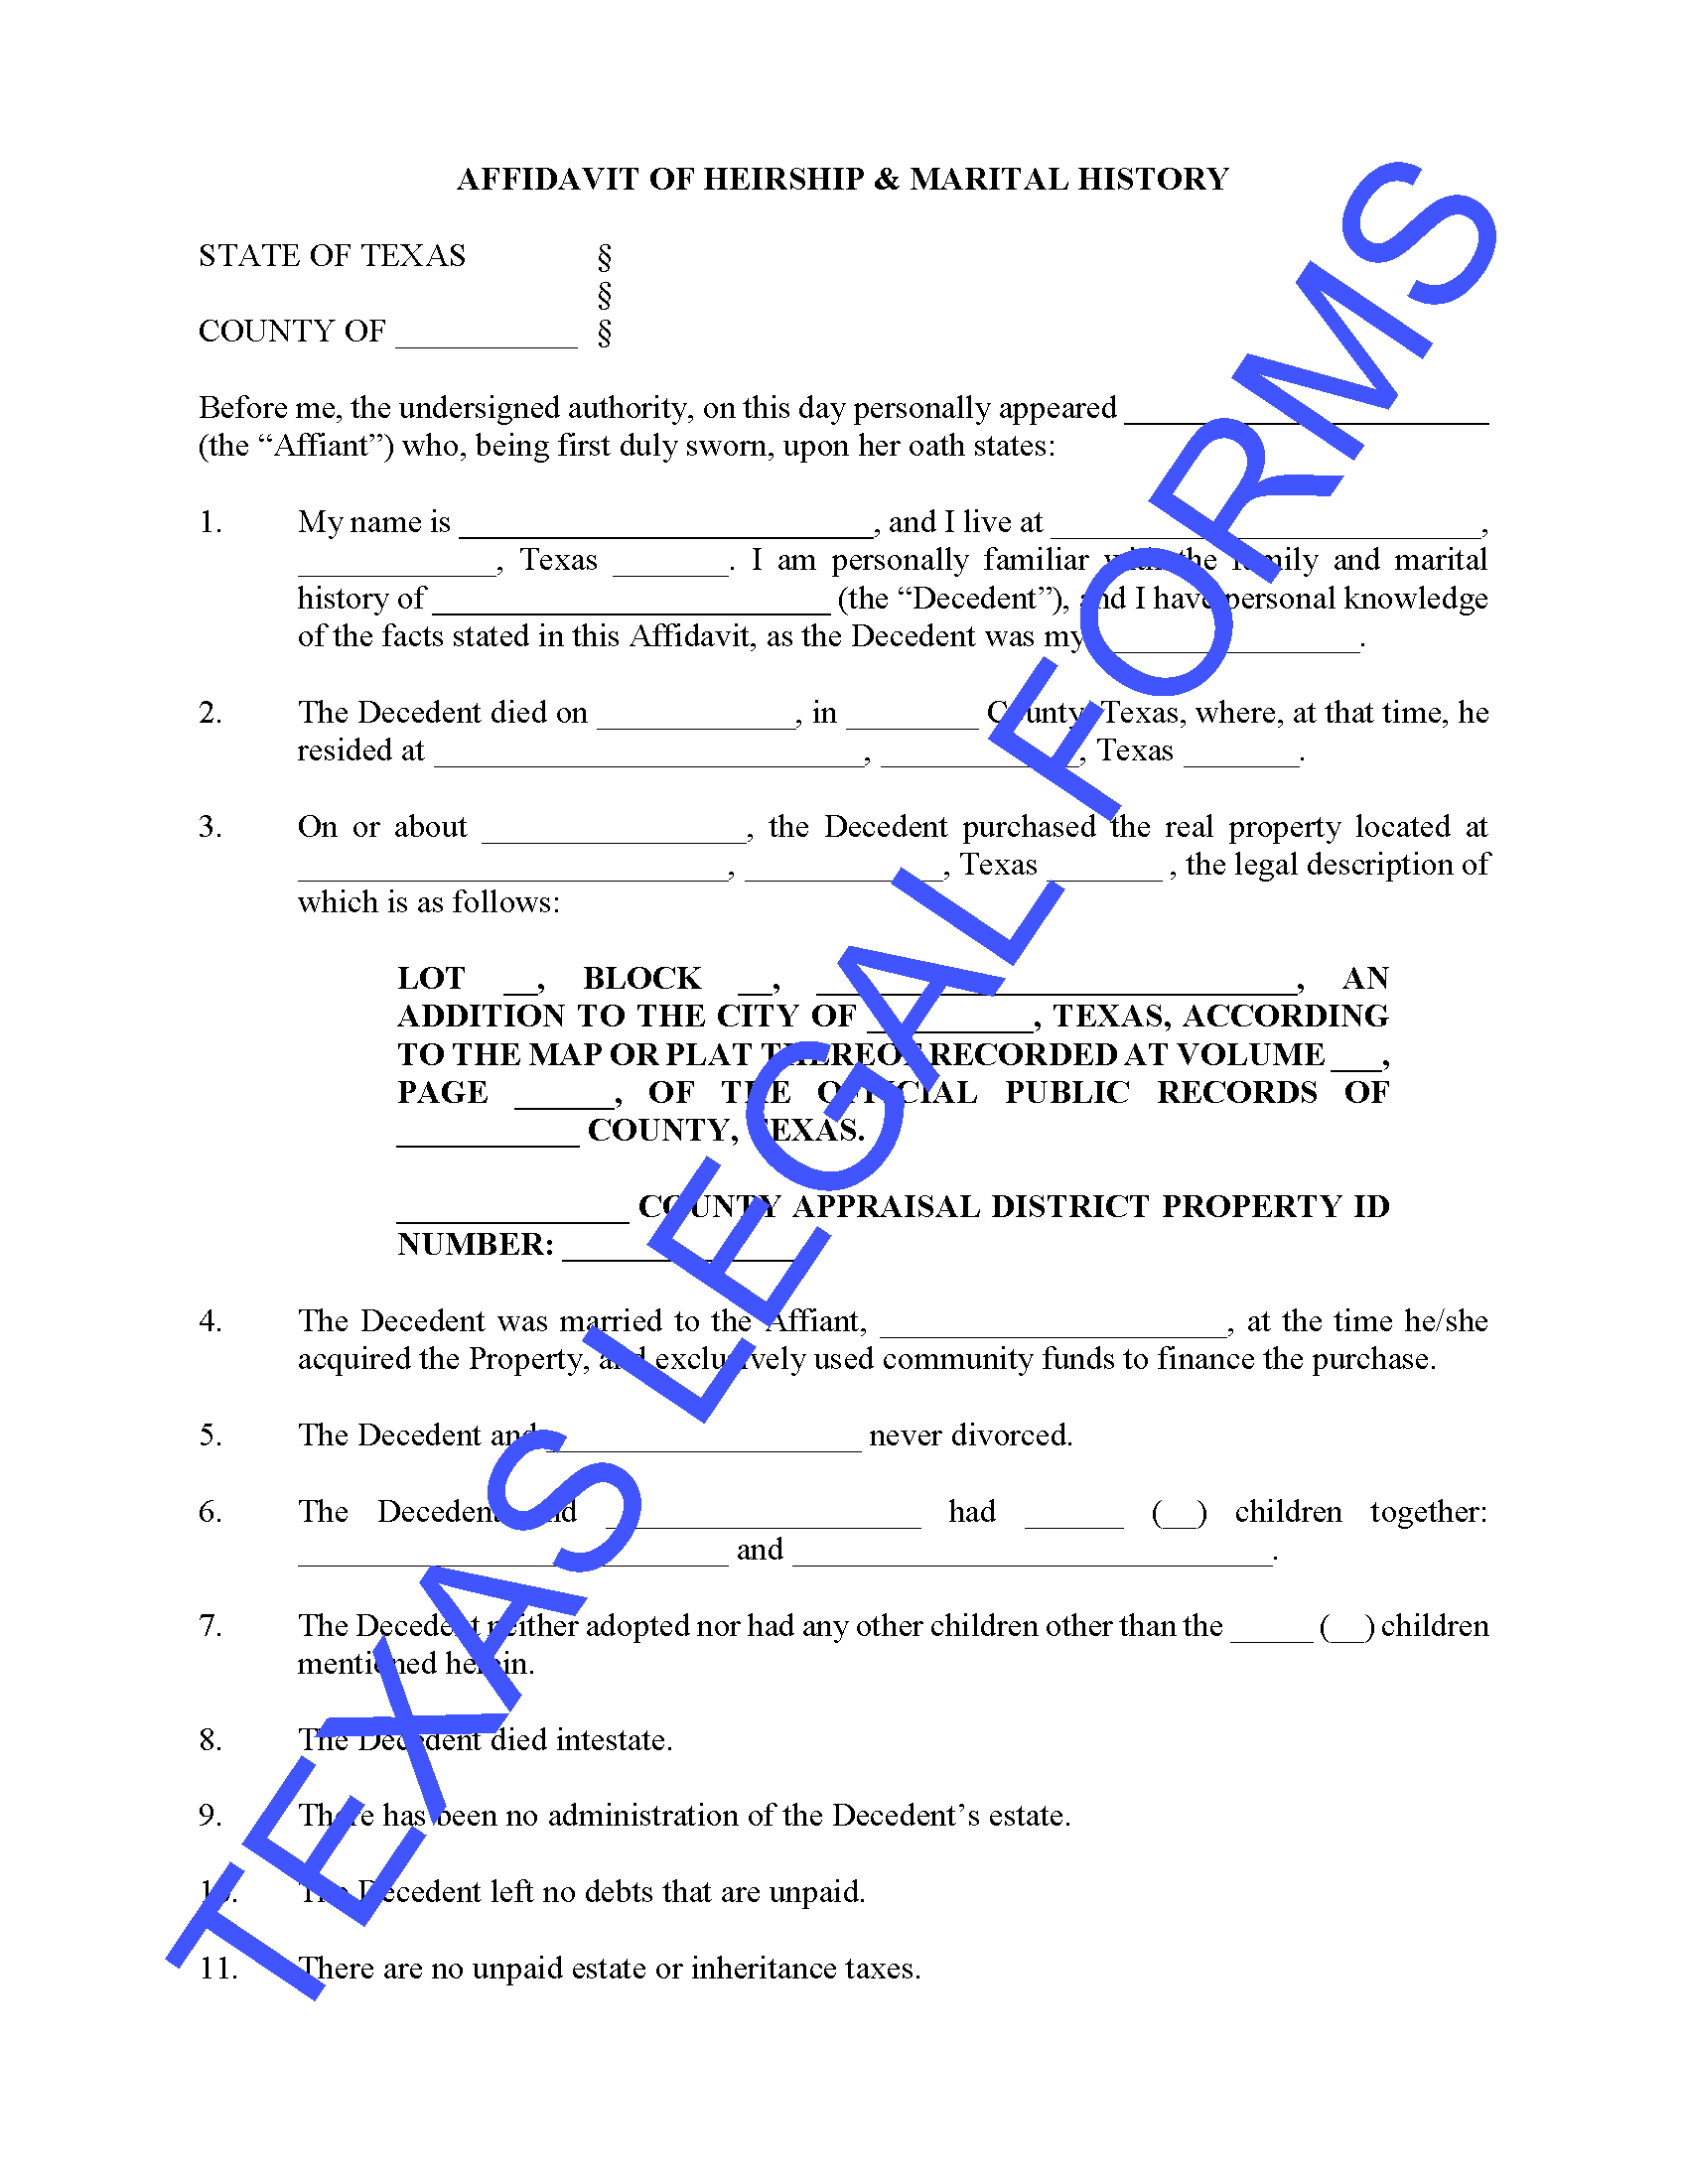 affidavit-of-heirship-template-texas